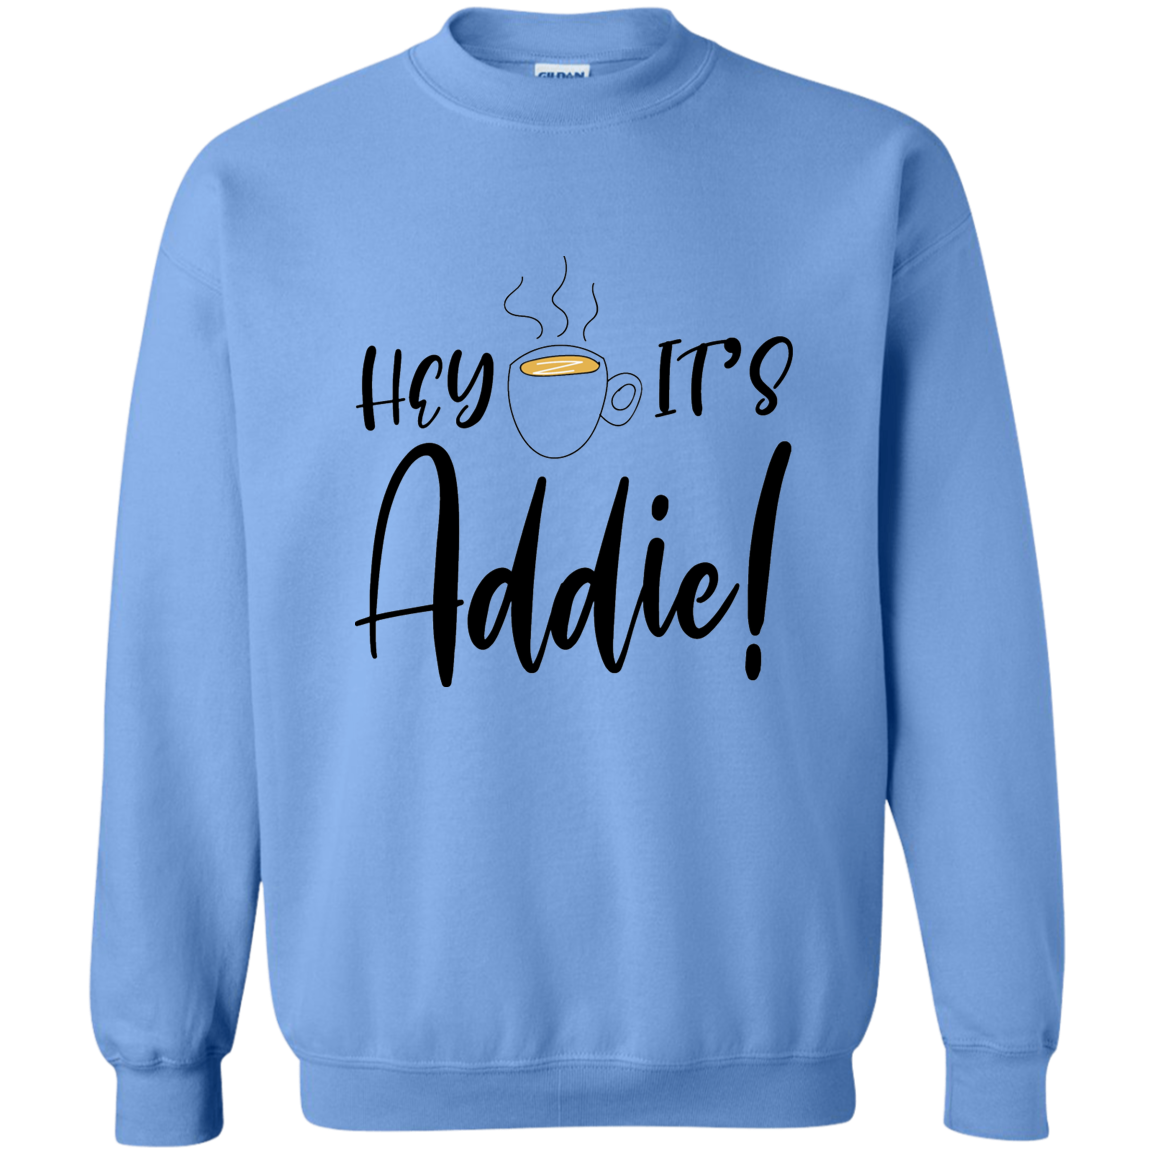 Addie's Marvelous Sweatshirt